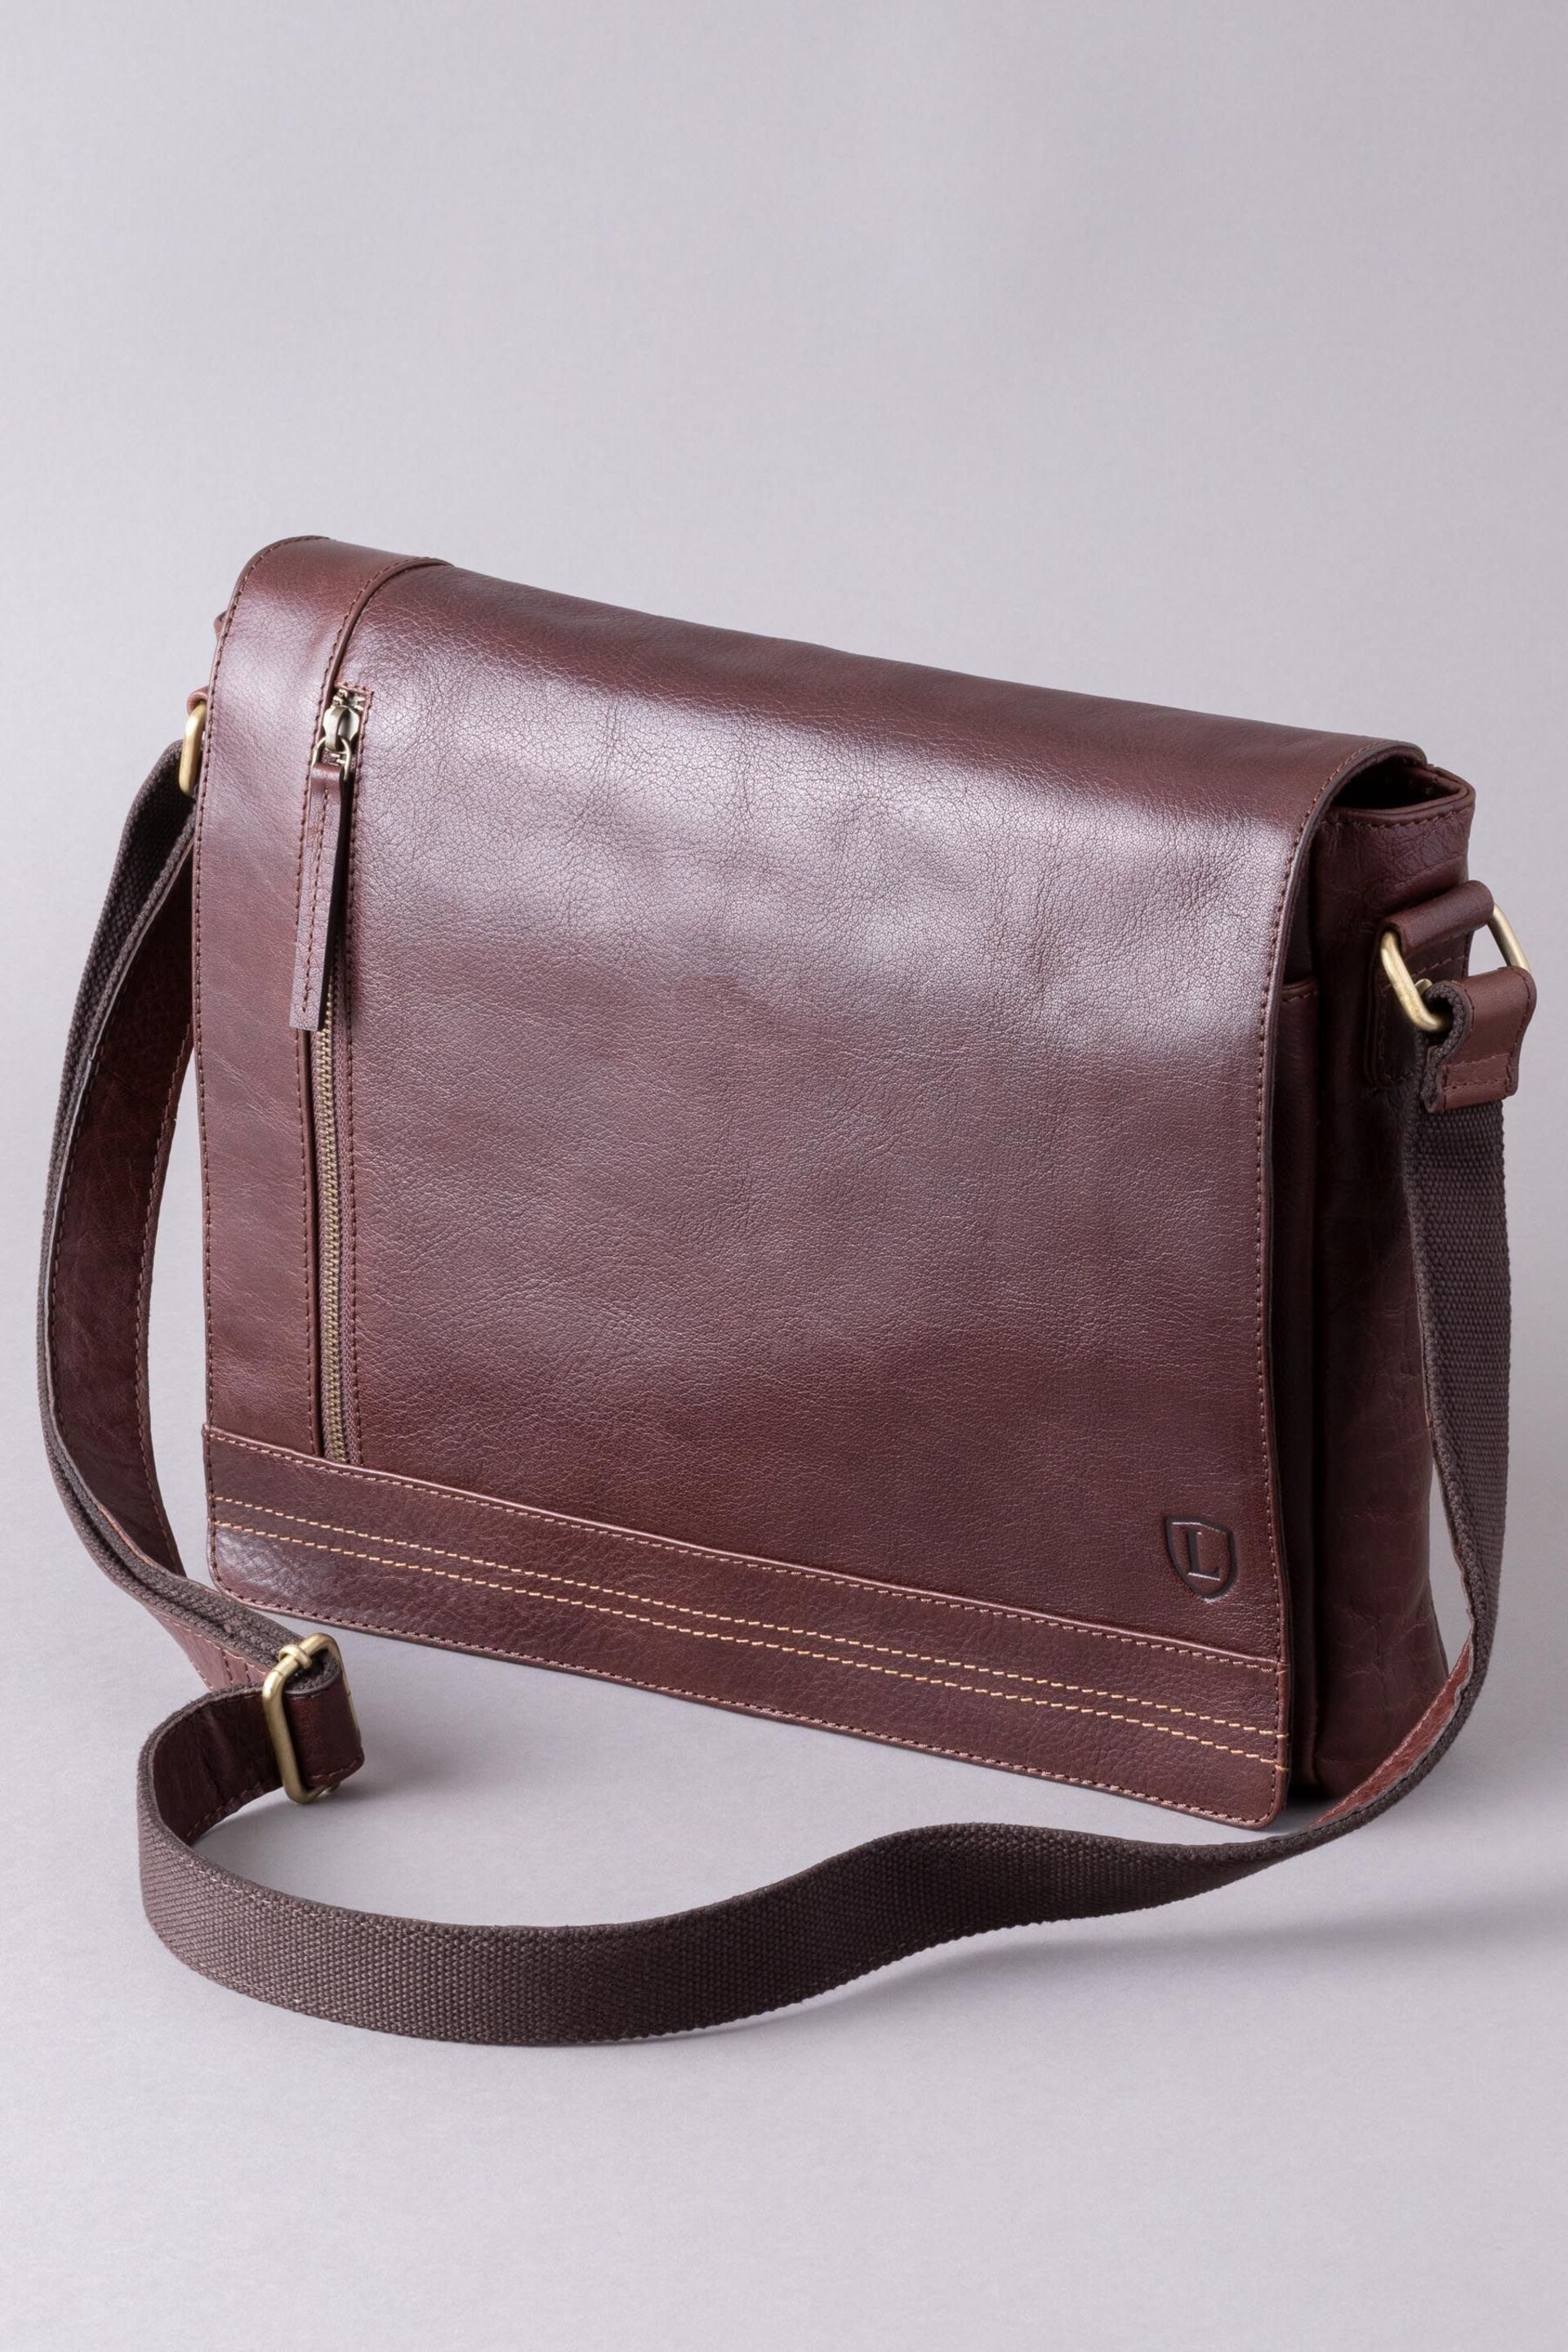 Lakeland Leather Brown Large Keswick Leather Messenger Bag - Image 3 of 4